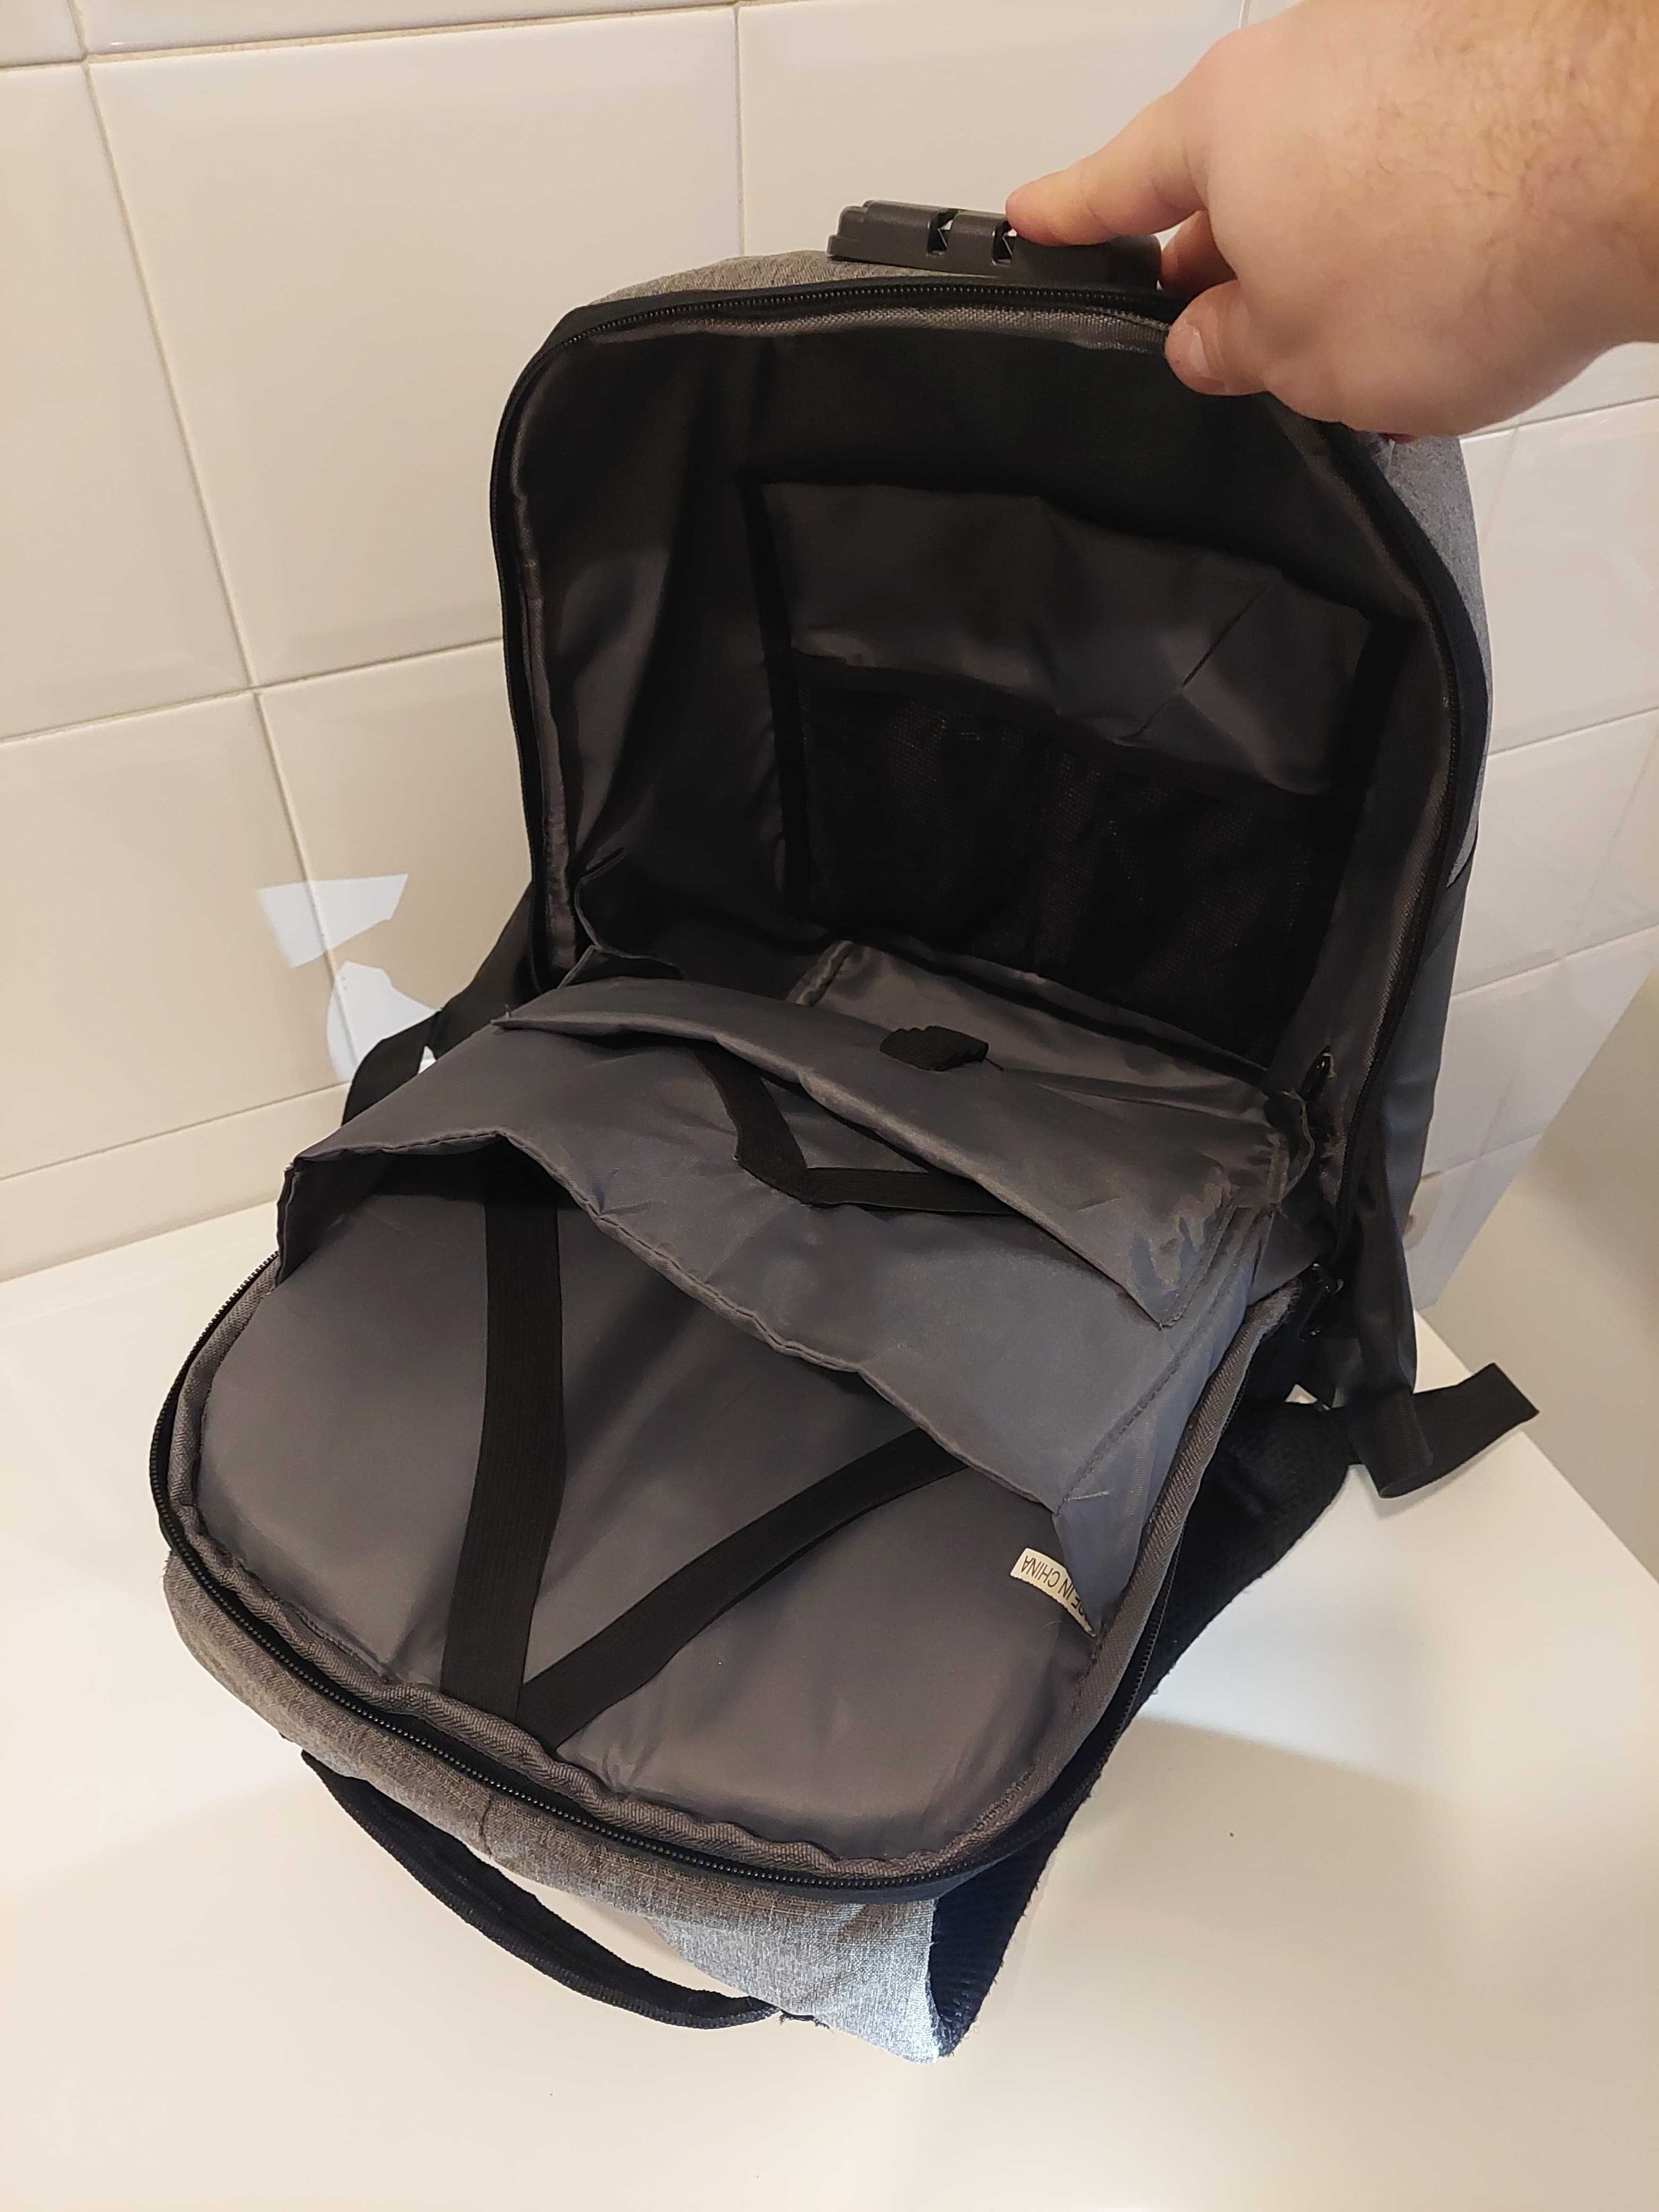 Backpack/Mochila para Laptop com USB, trava de segredo, abertura 180°